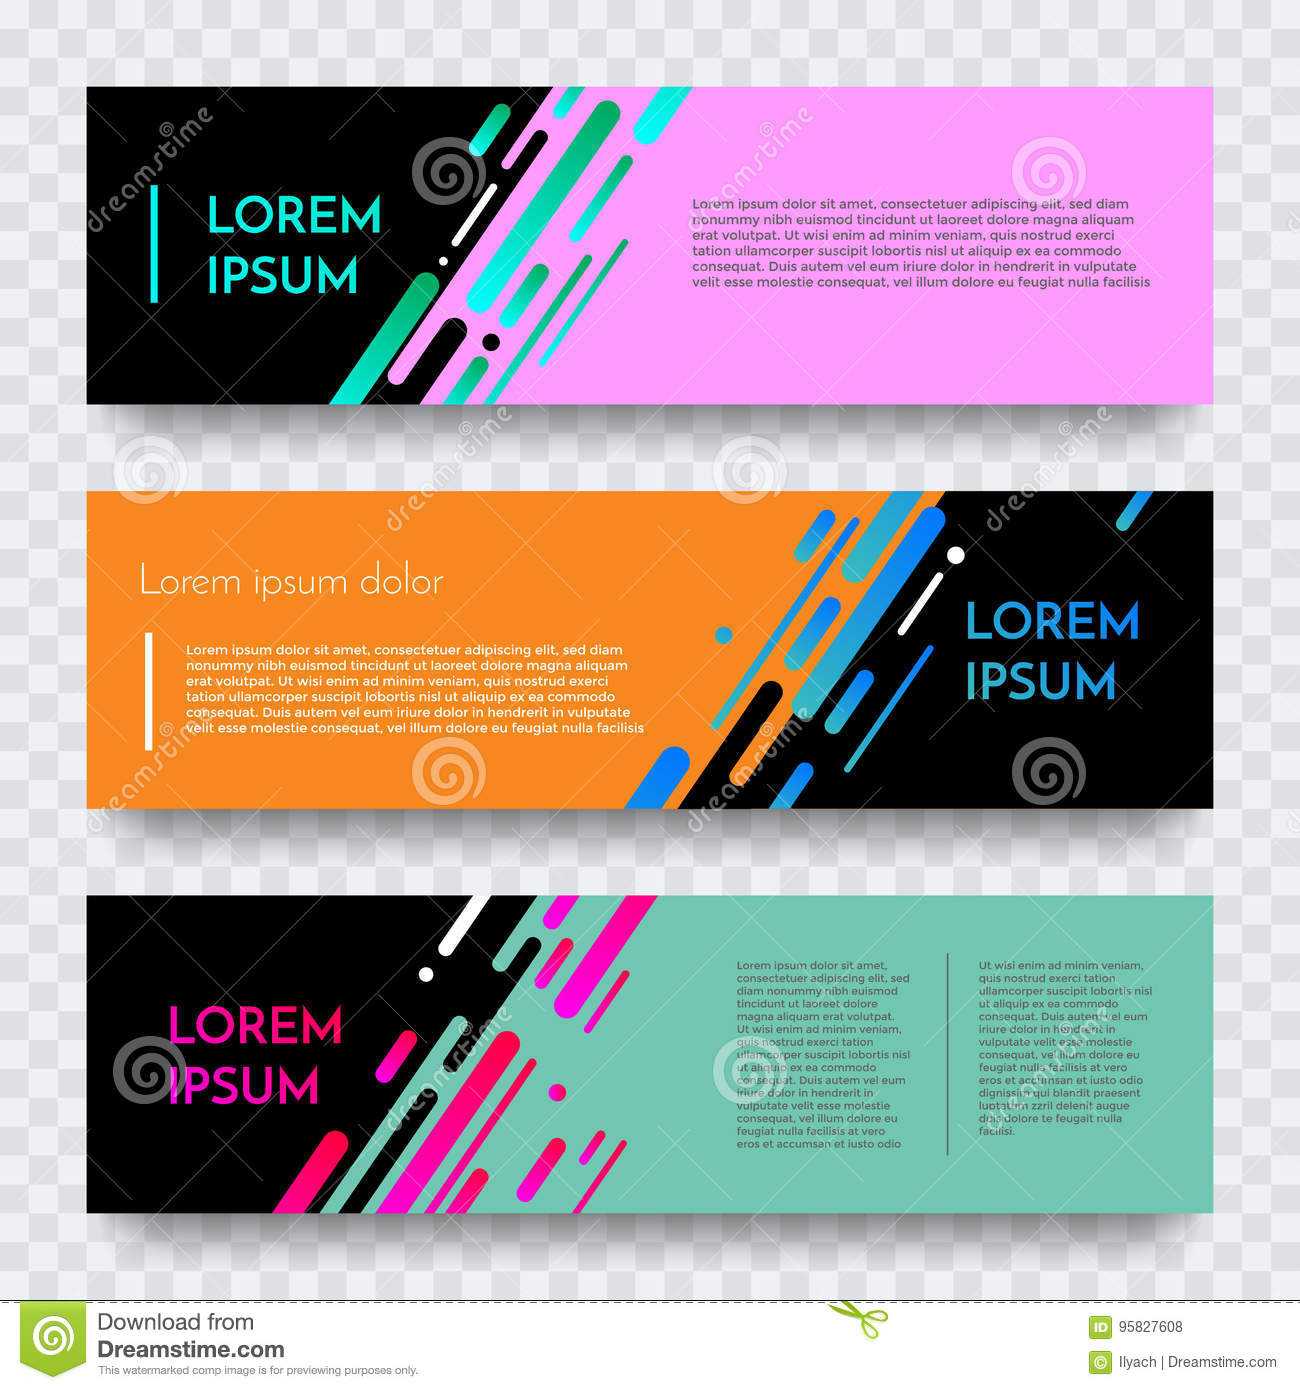 Web Banners Set For Vector Digital Website Background With Regard To Website Banner Design Templates